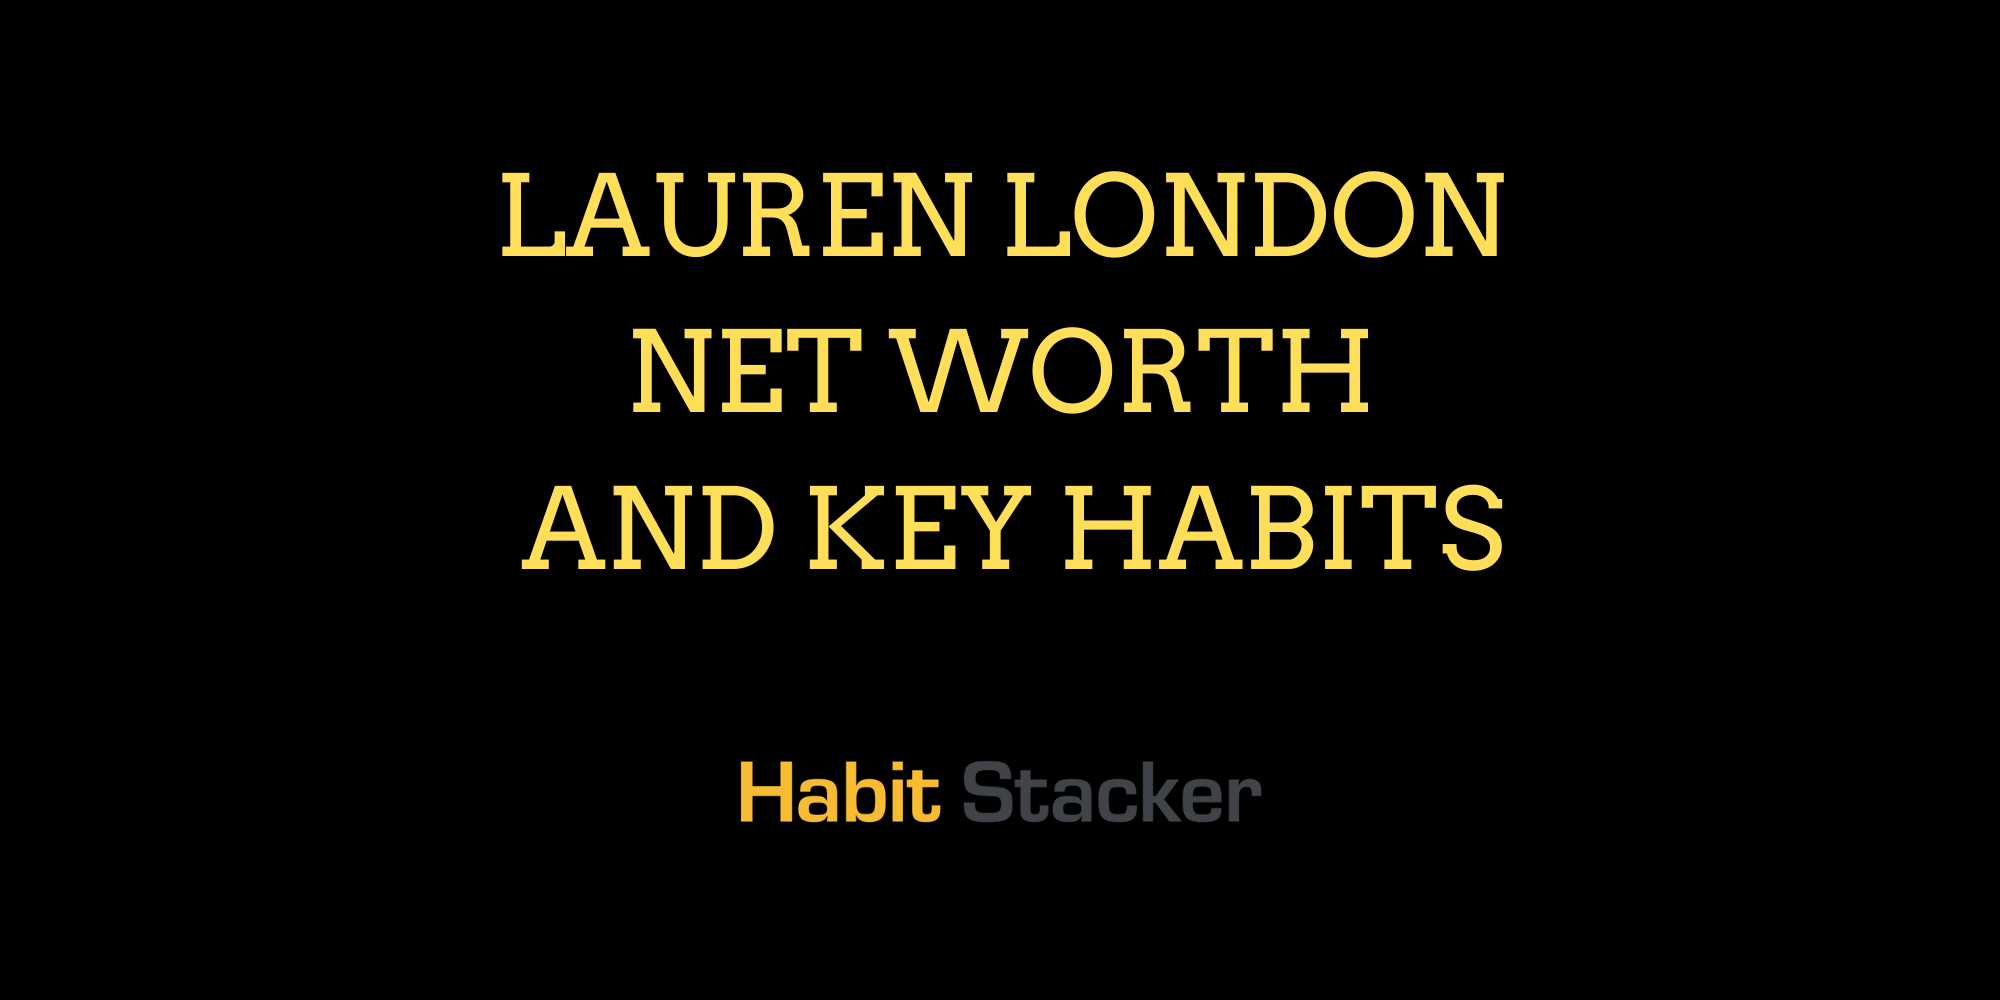 Lauren London Net Worth and Key Habits